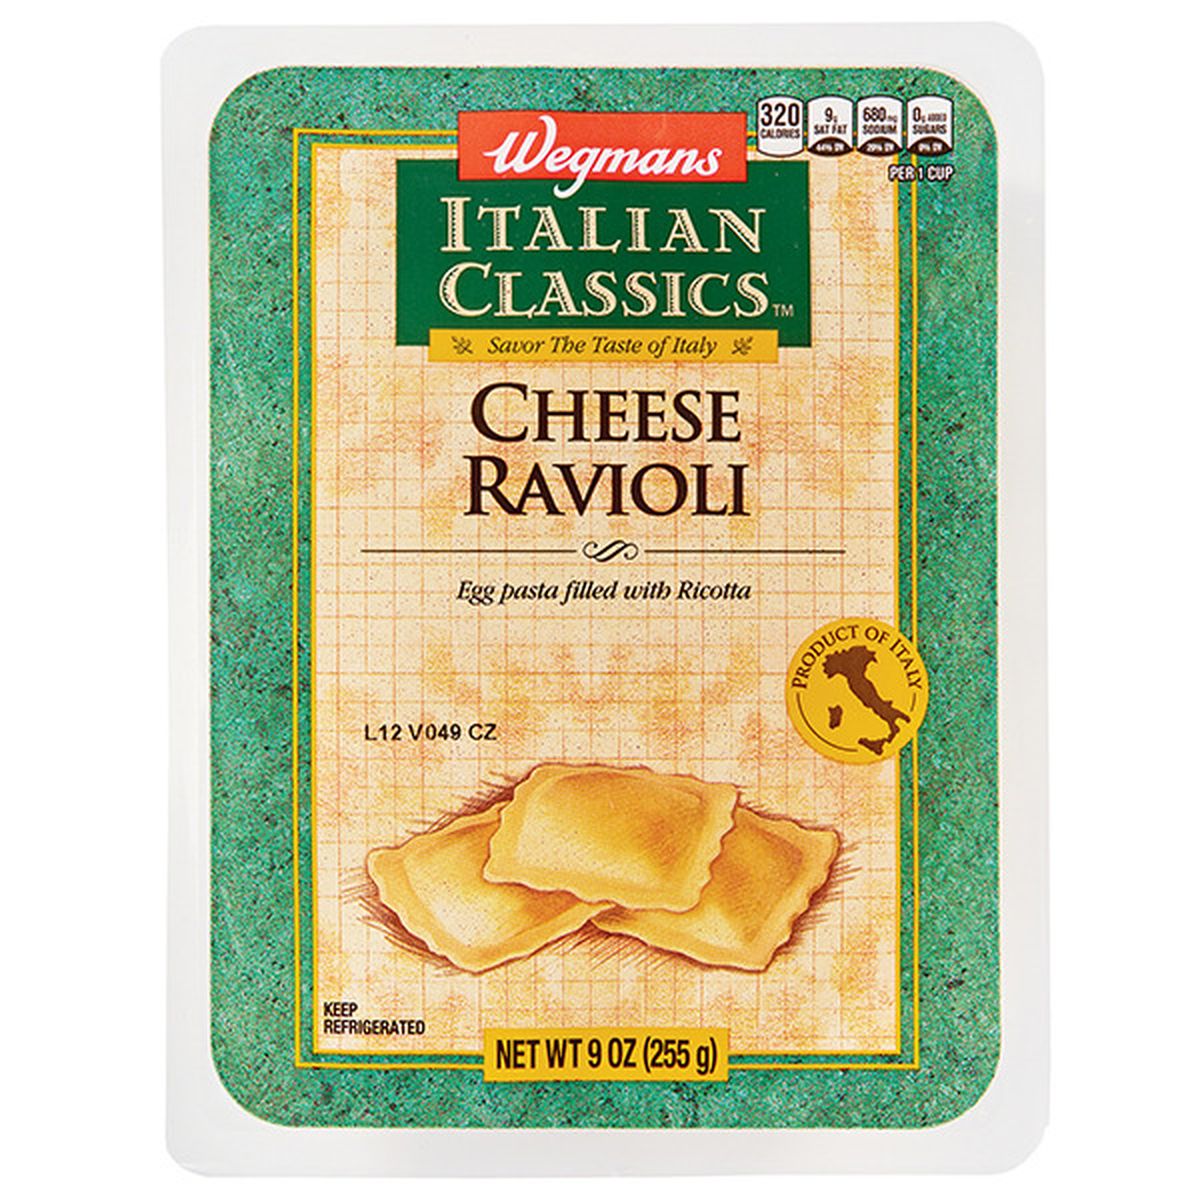 Calories in Wegmans Italian Classics Cheese Ravioli